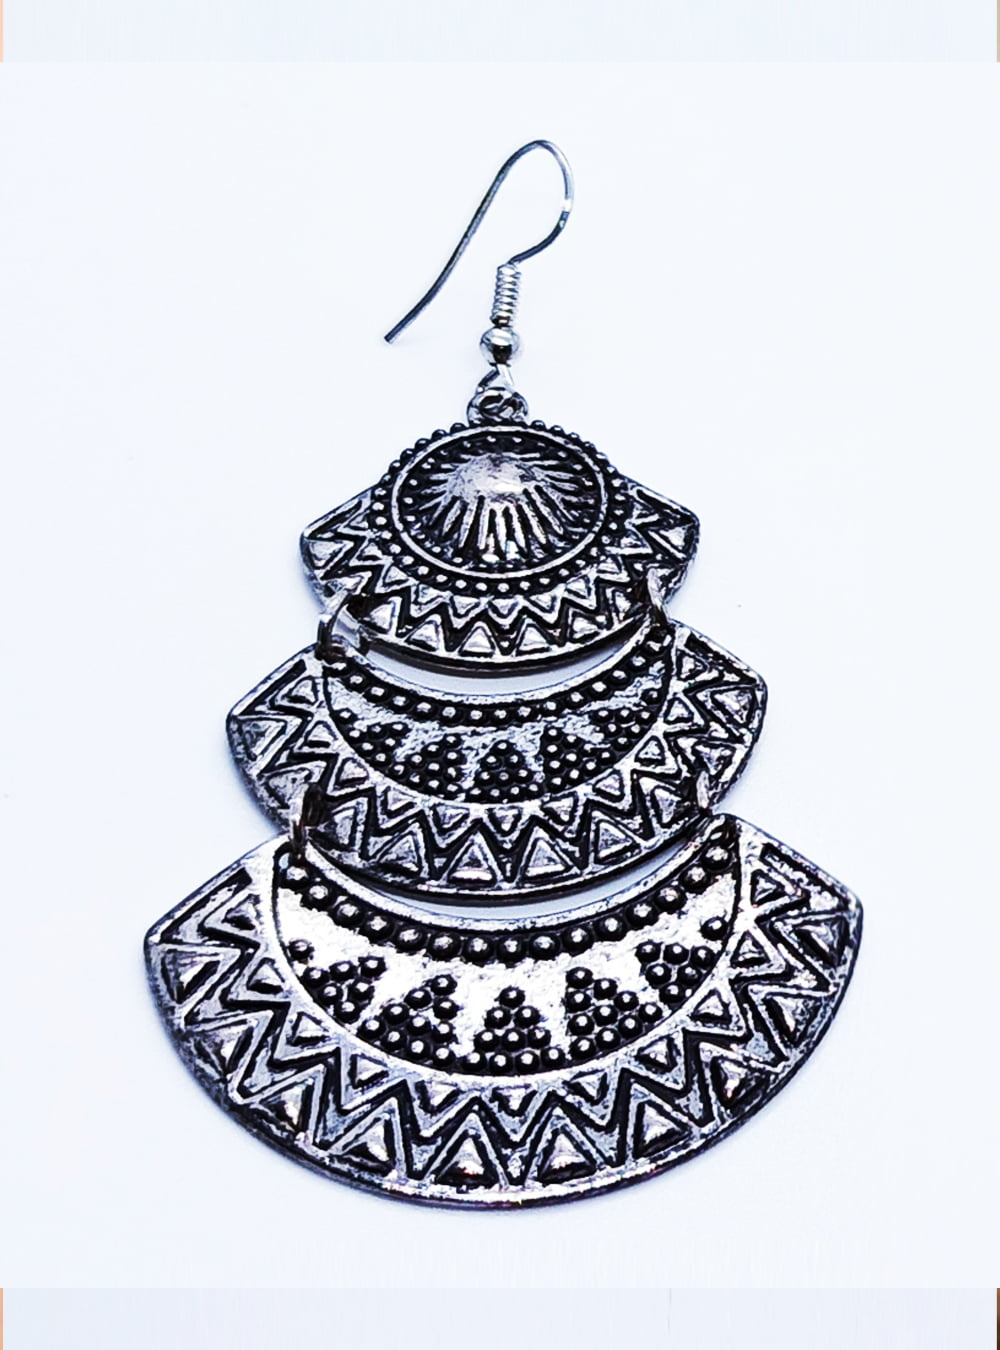 buy-boho-oxidised-jhumka-earrings-online-nesy-lifestyle